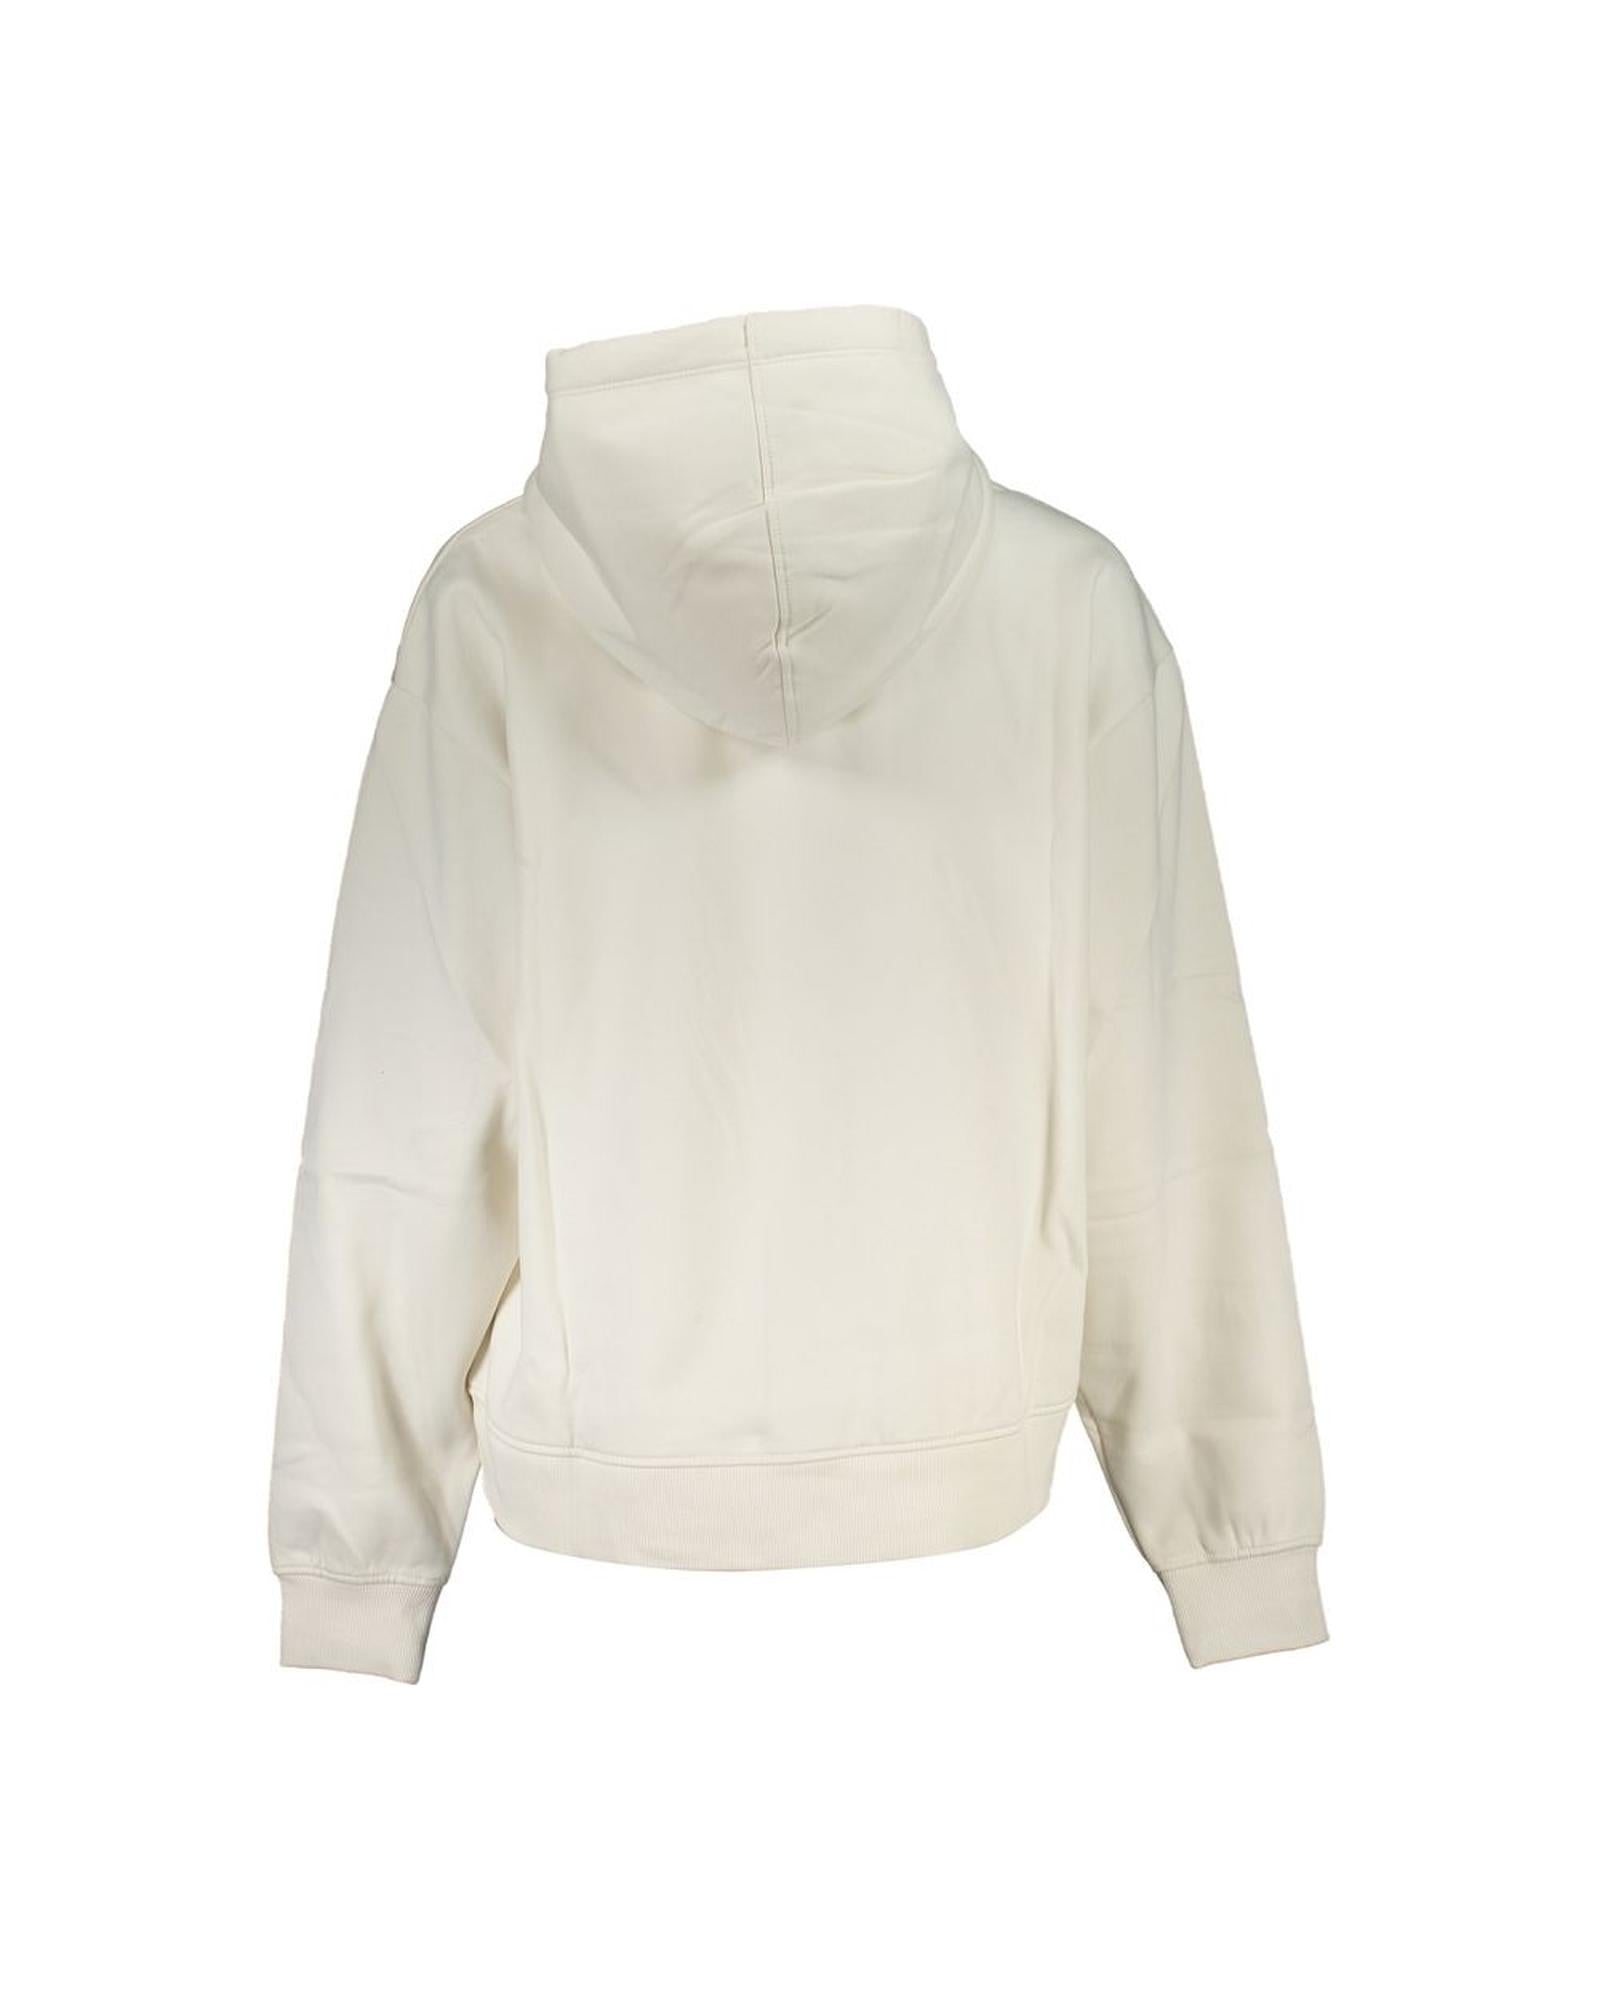 Women's White Cotton Sweater - M